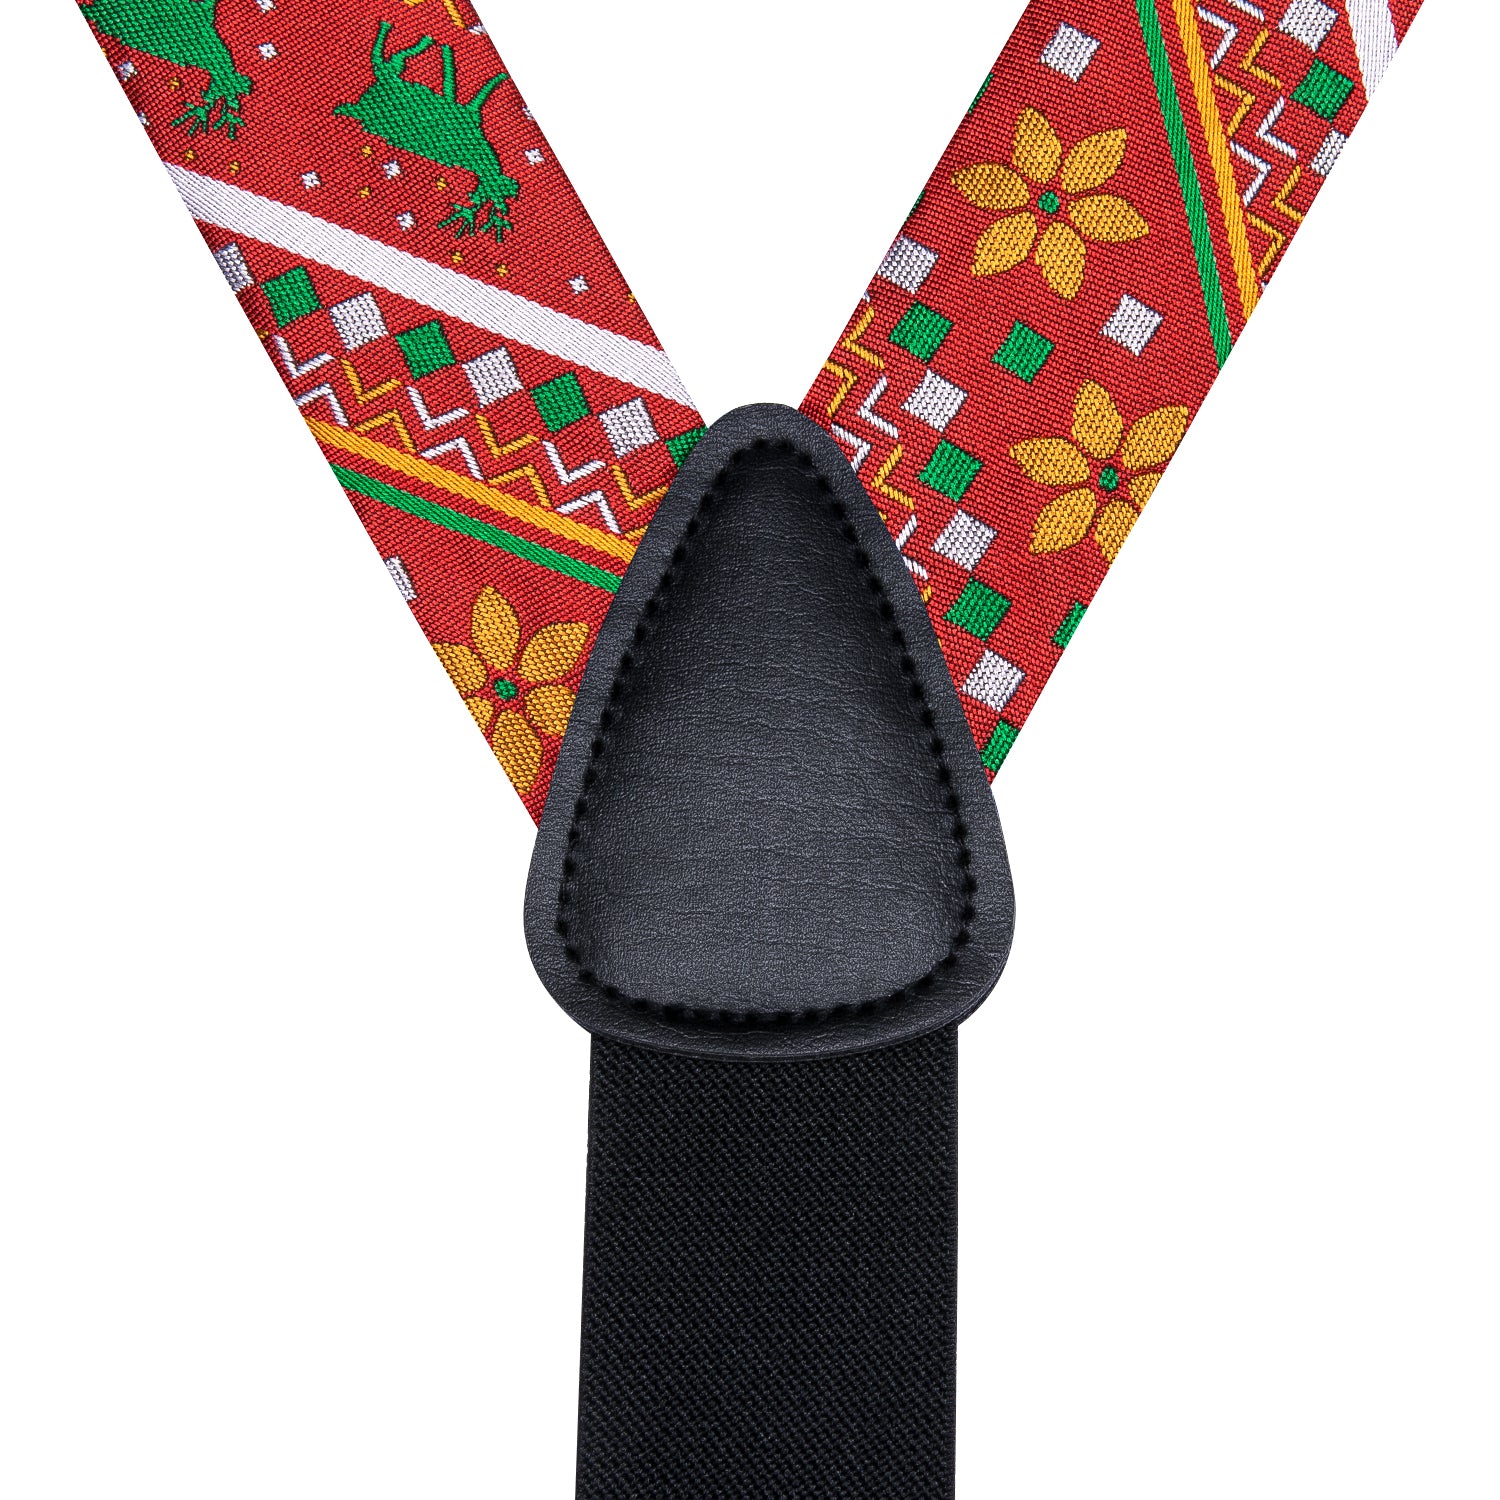 Red Christmas Novelty Suspender Bowtie Hanky Cufflinks Set